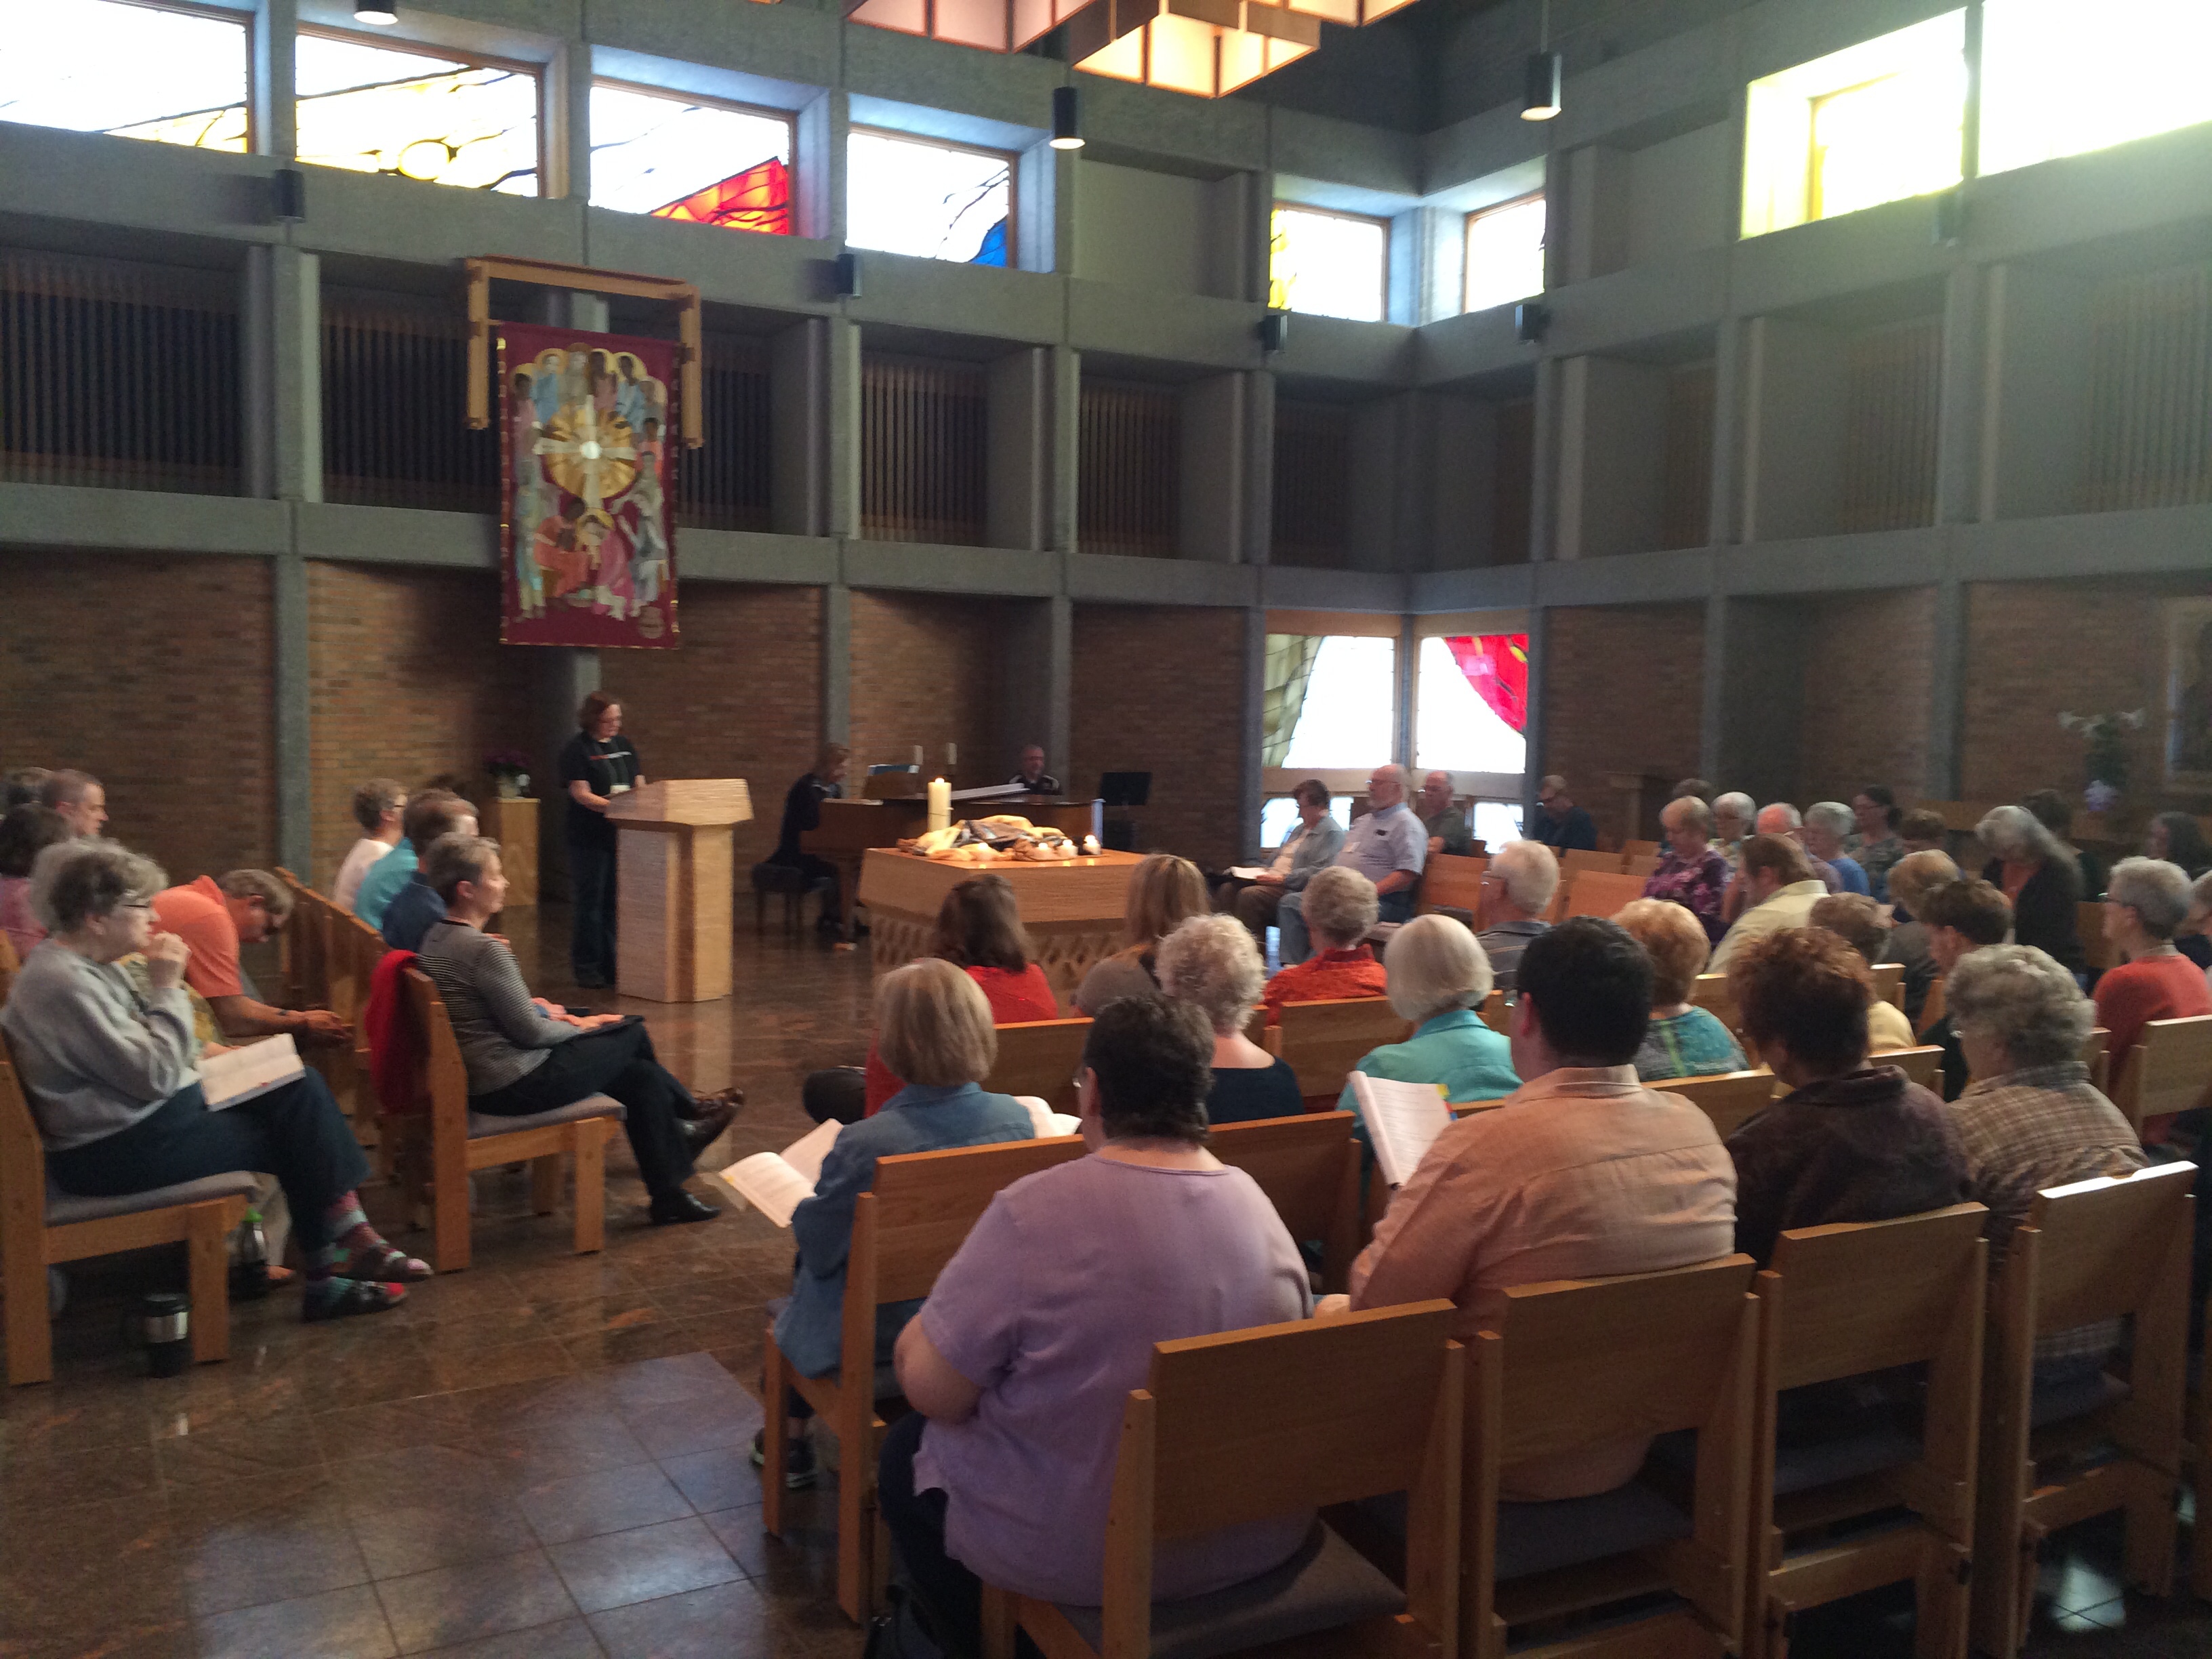 
Nebraska Five-Day Academy for Spiritual Formation
St. Benedict Center, Schuyler, Nebraska (April 27-May 2, 2014)
